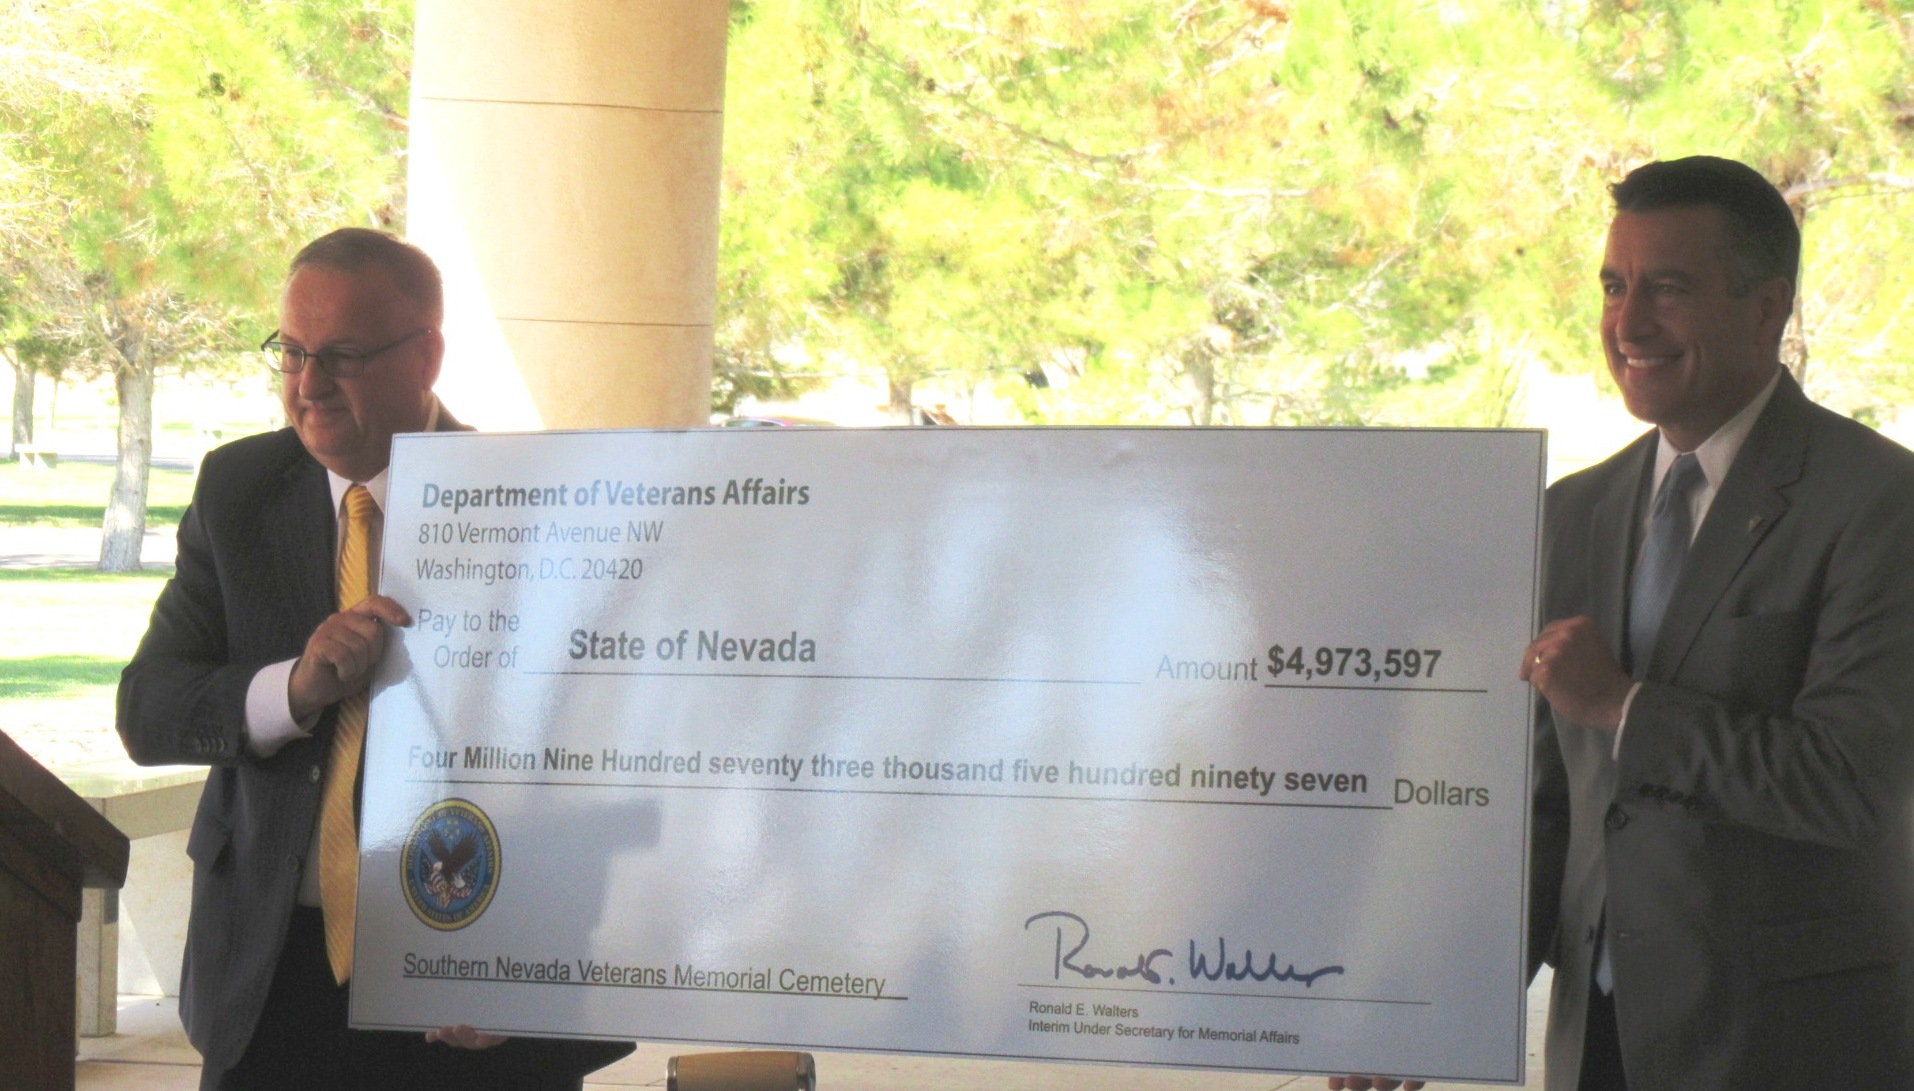 STATE OF NEVADA, VETERANS CEMETERY TO COMMEMORATE $5 MILLION GRANT AWARD